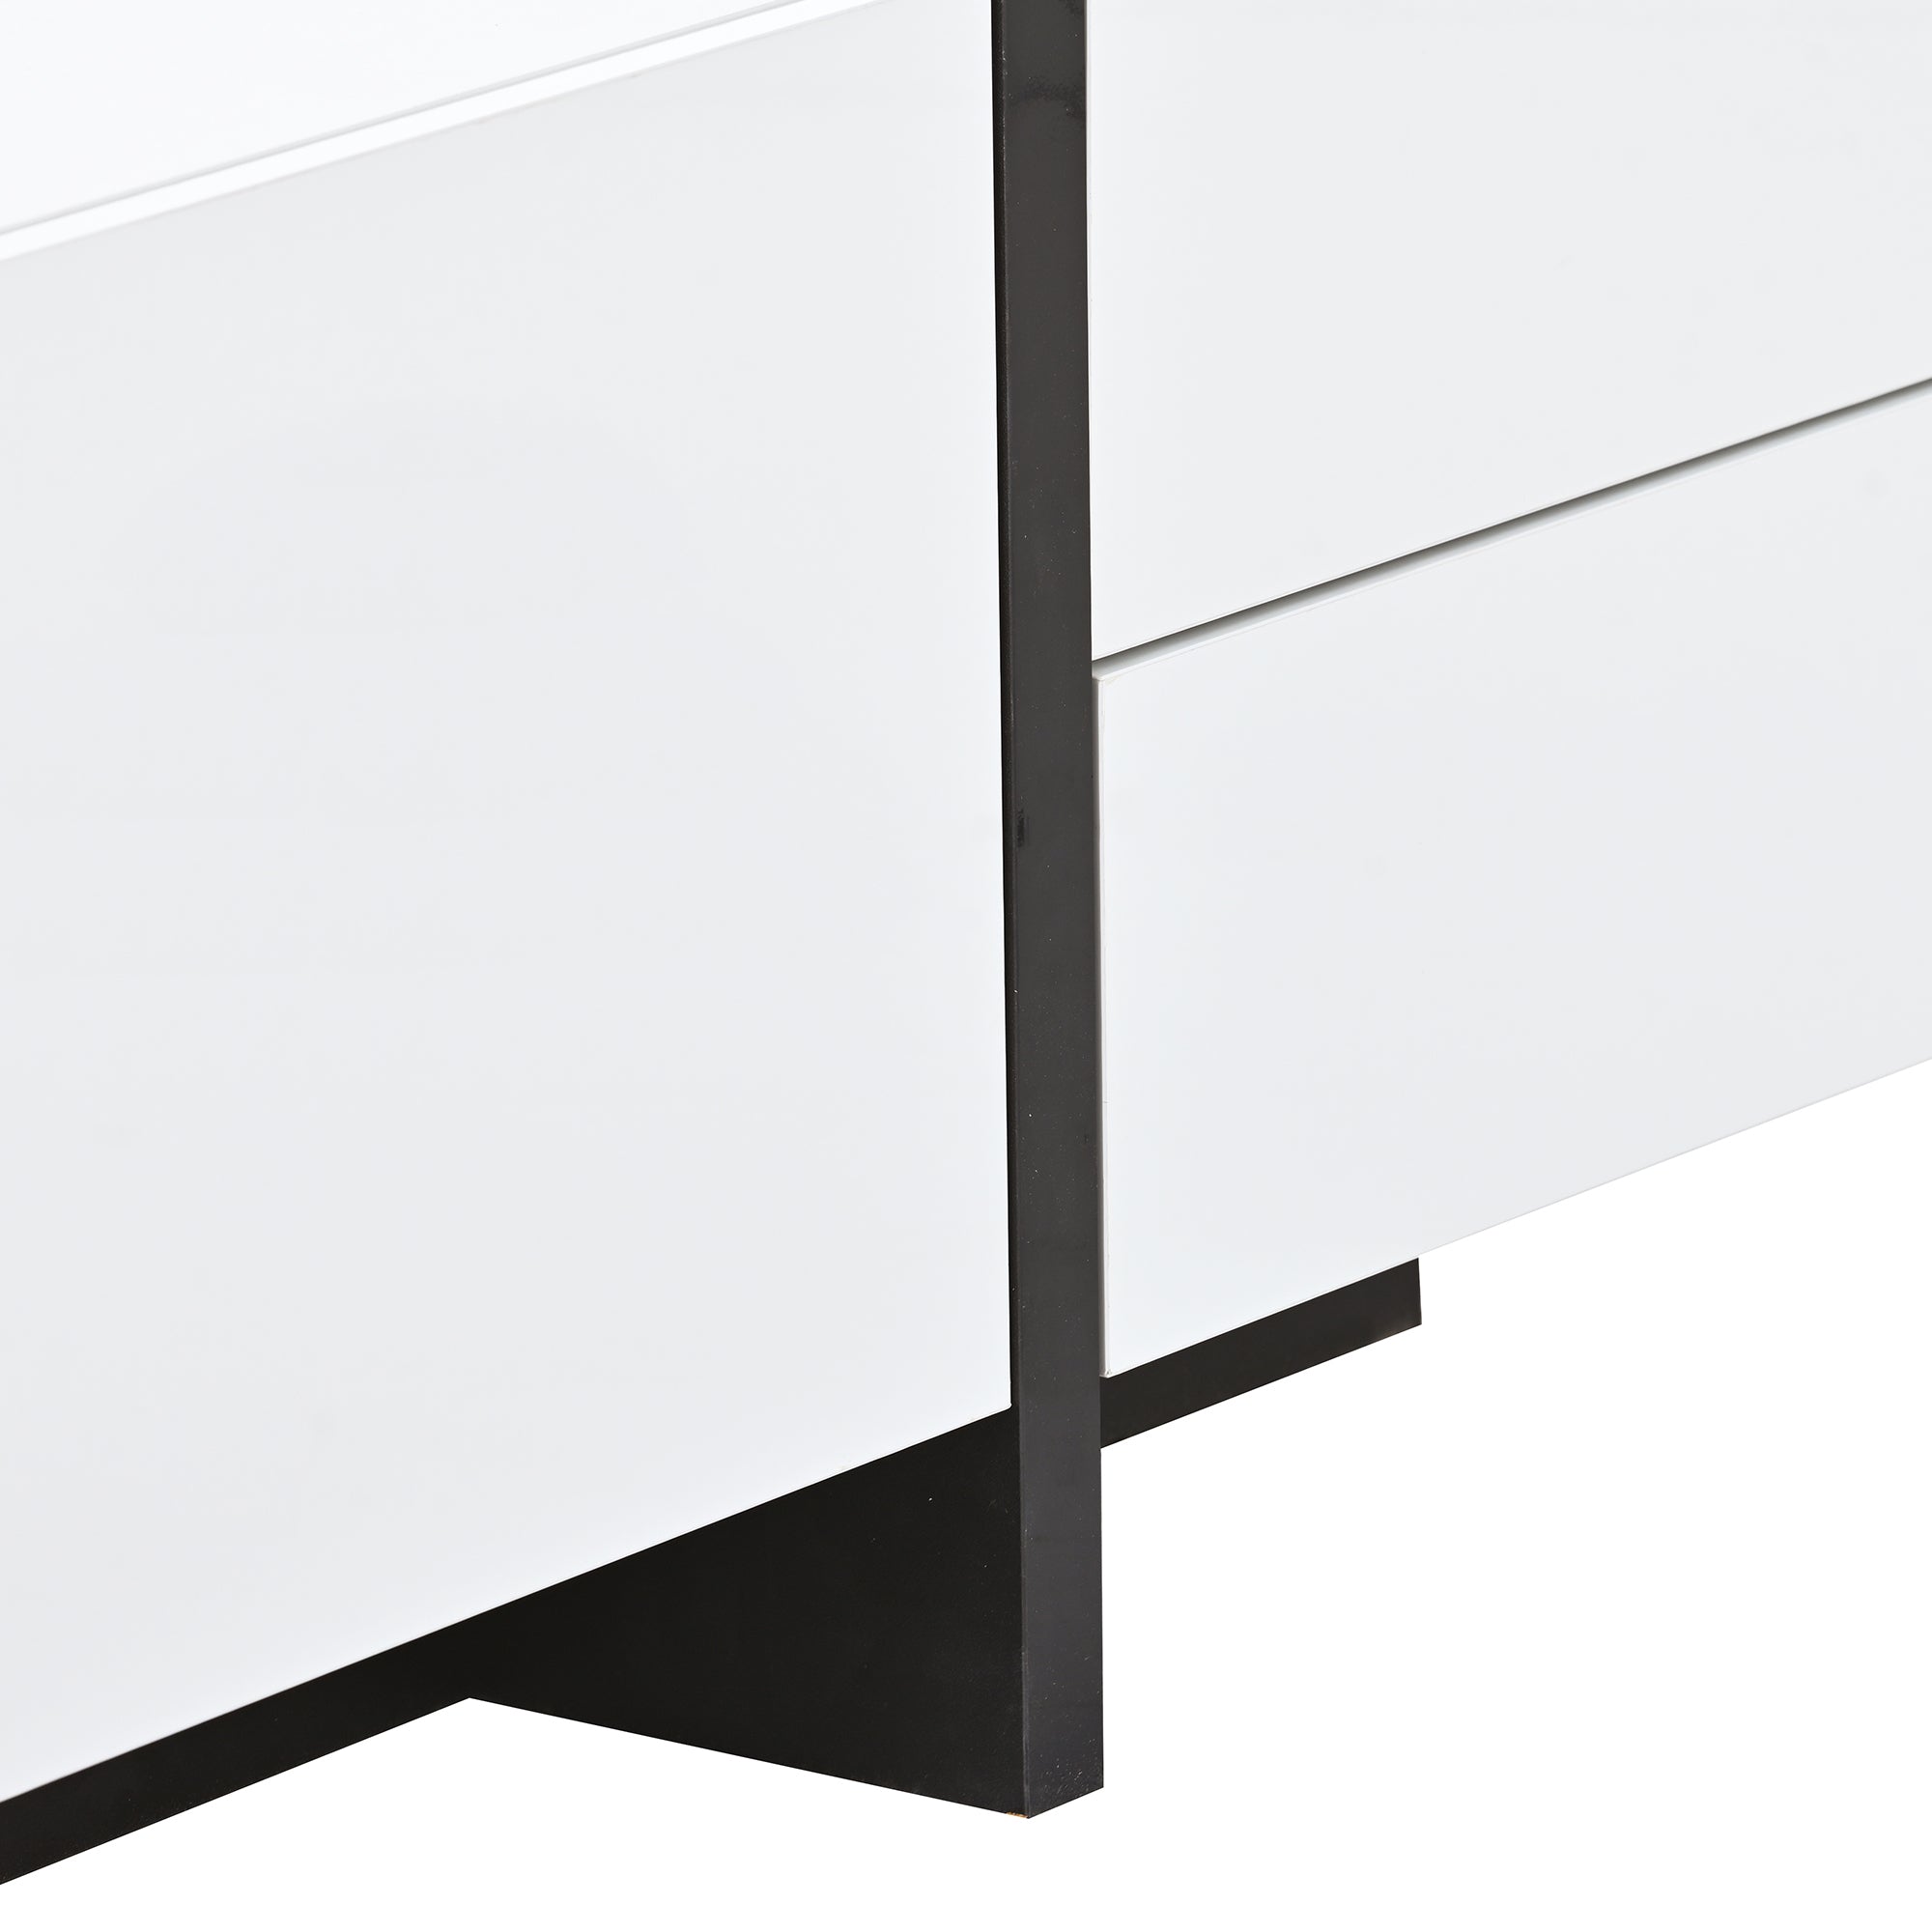 ON TREND White & Black Contemporary Rectangle Design white-particle board